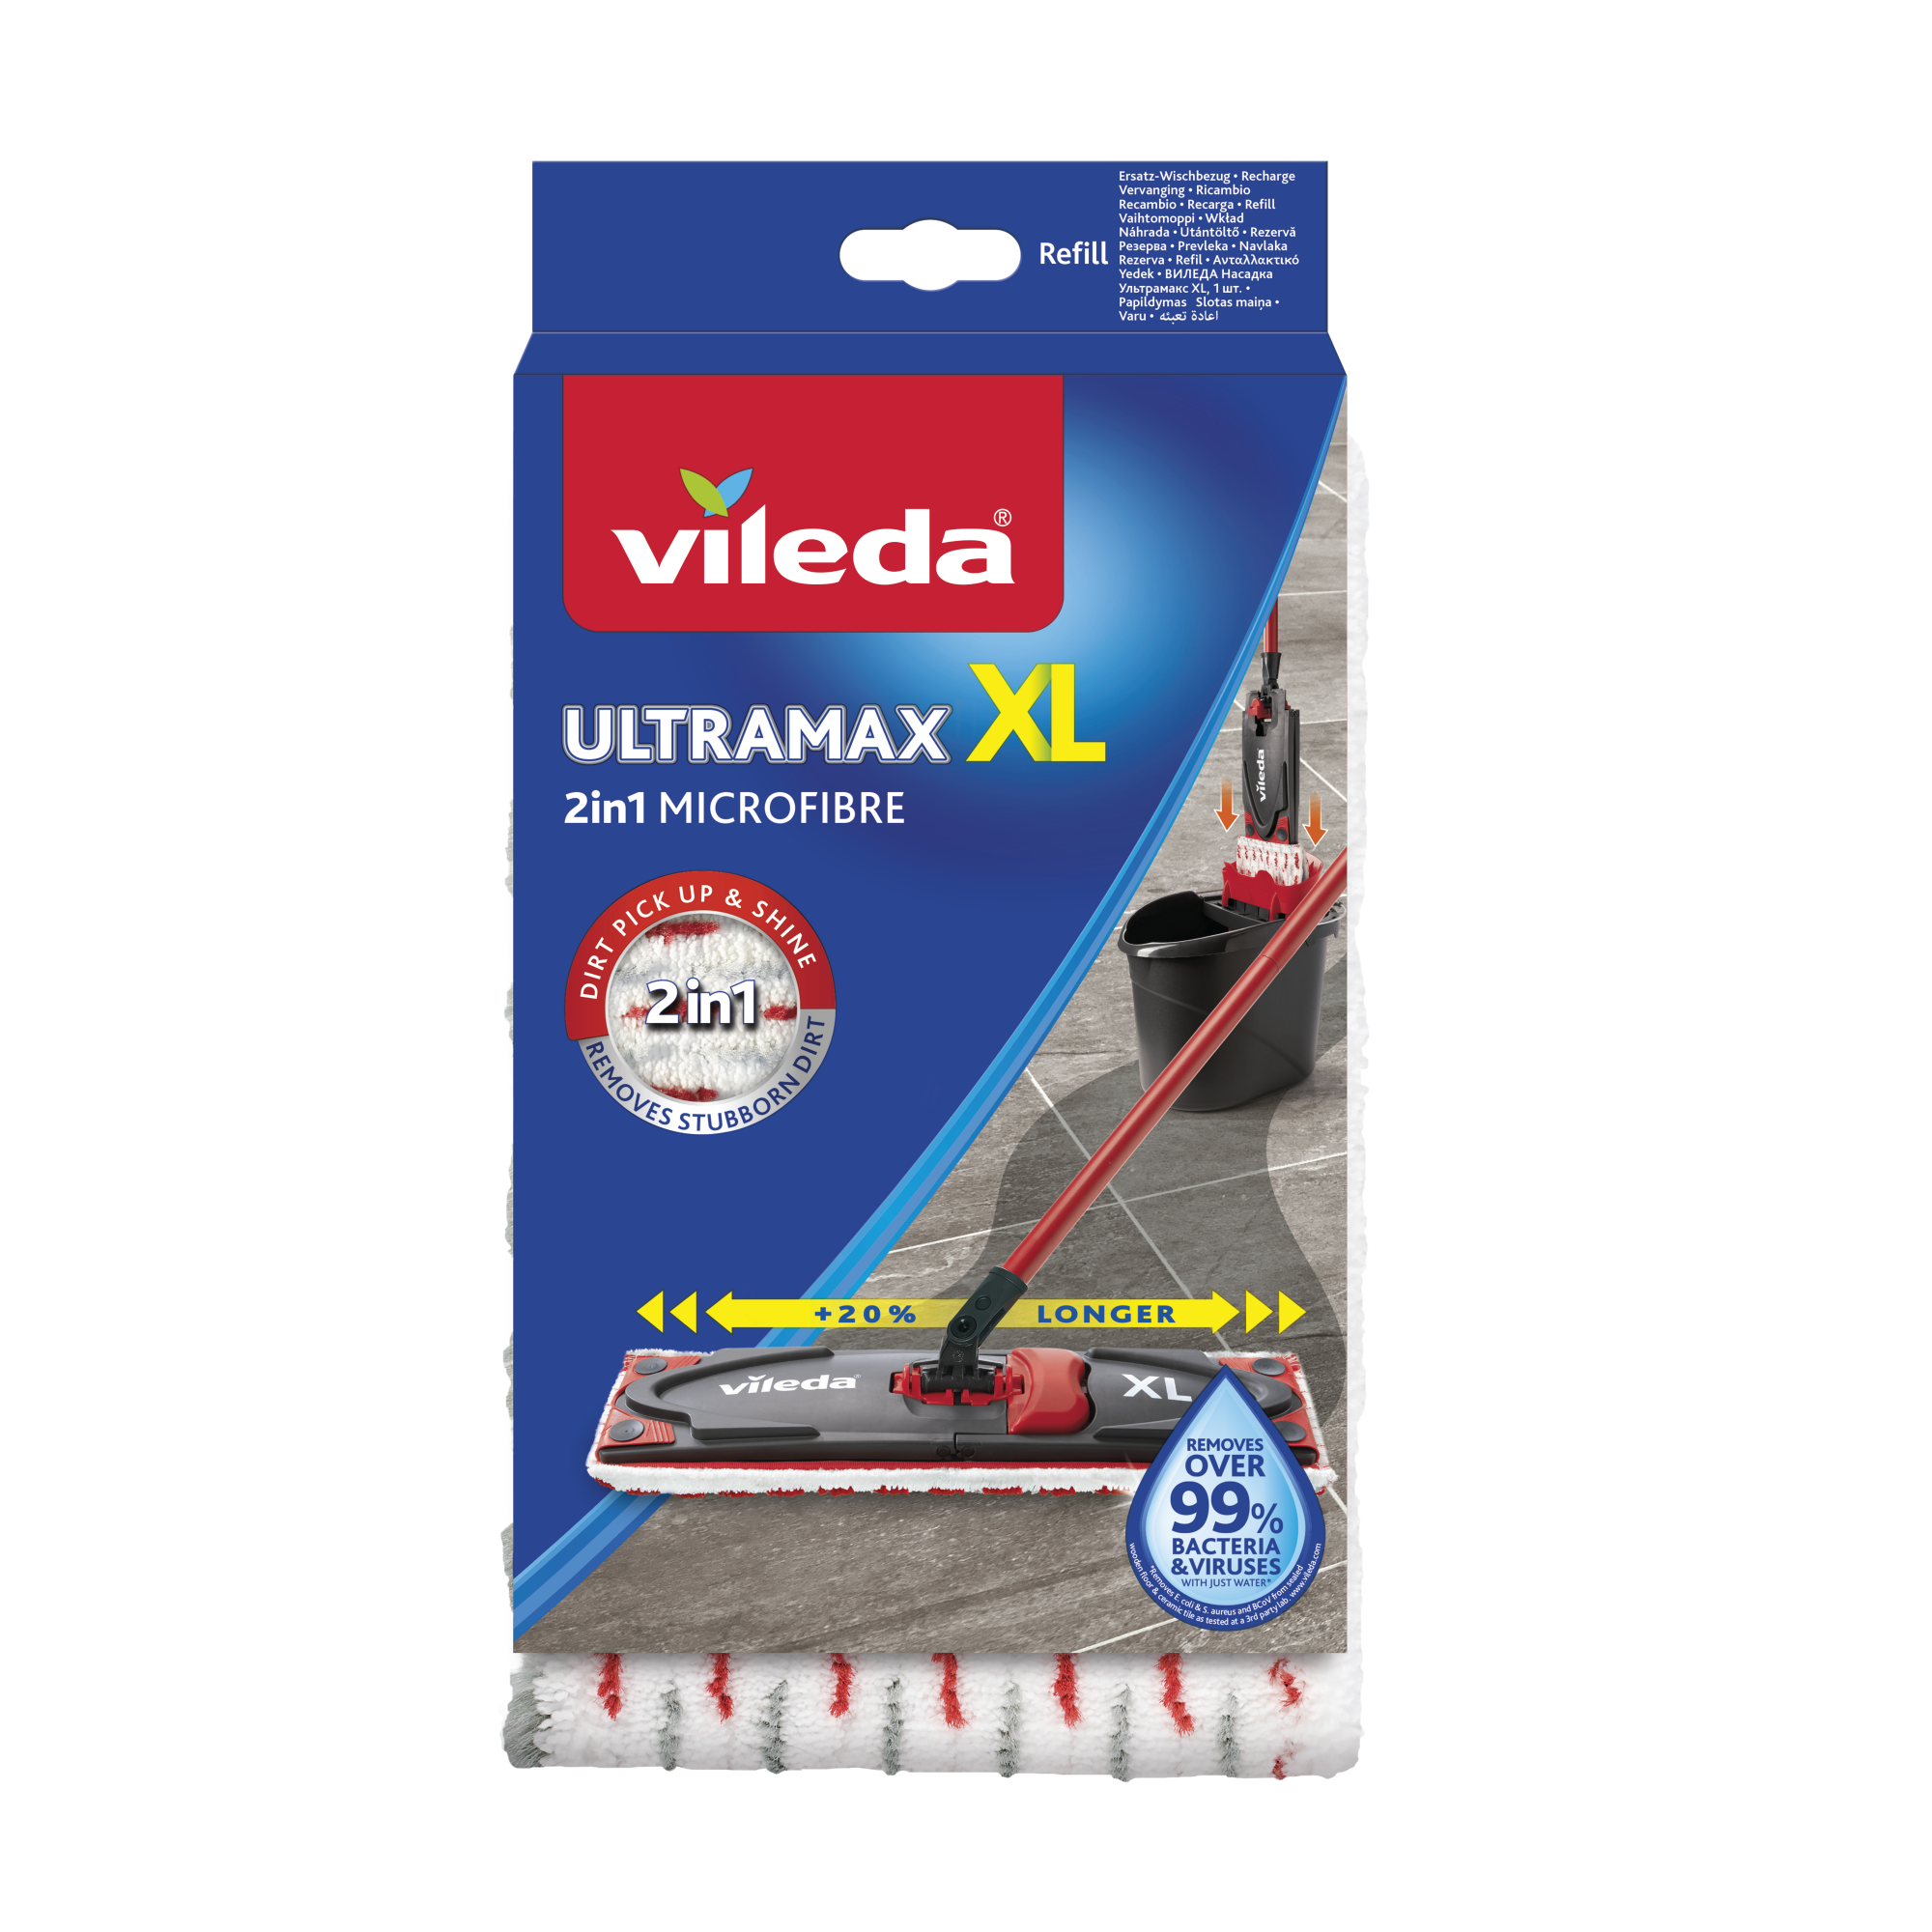 UltraMax XL 2in1 Microfibre Flat Mop Refill